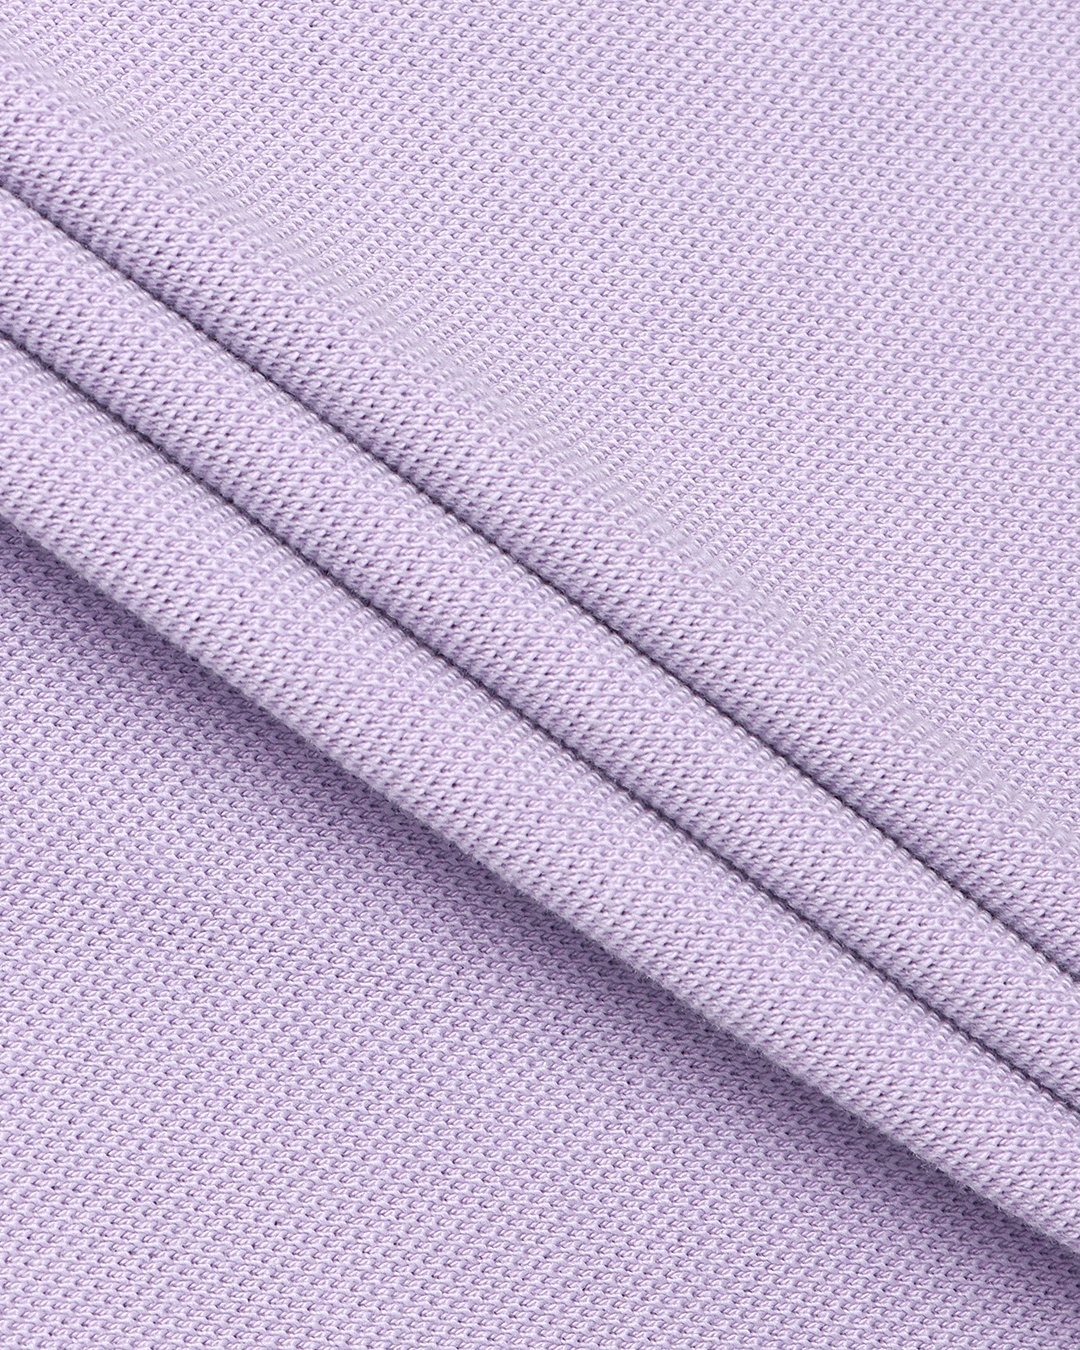 Shop Men's Purple Small Collar Tipping Polo T-shirt